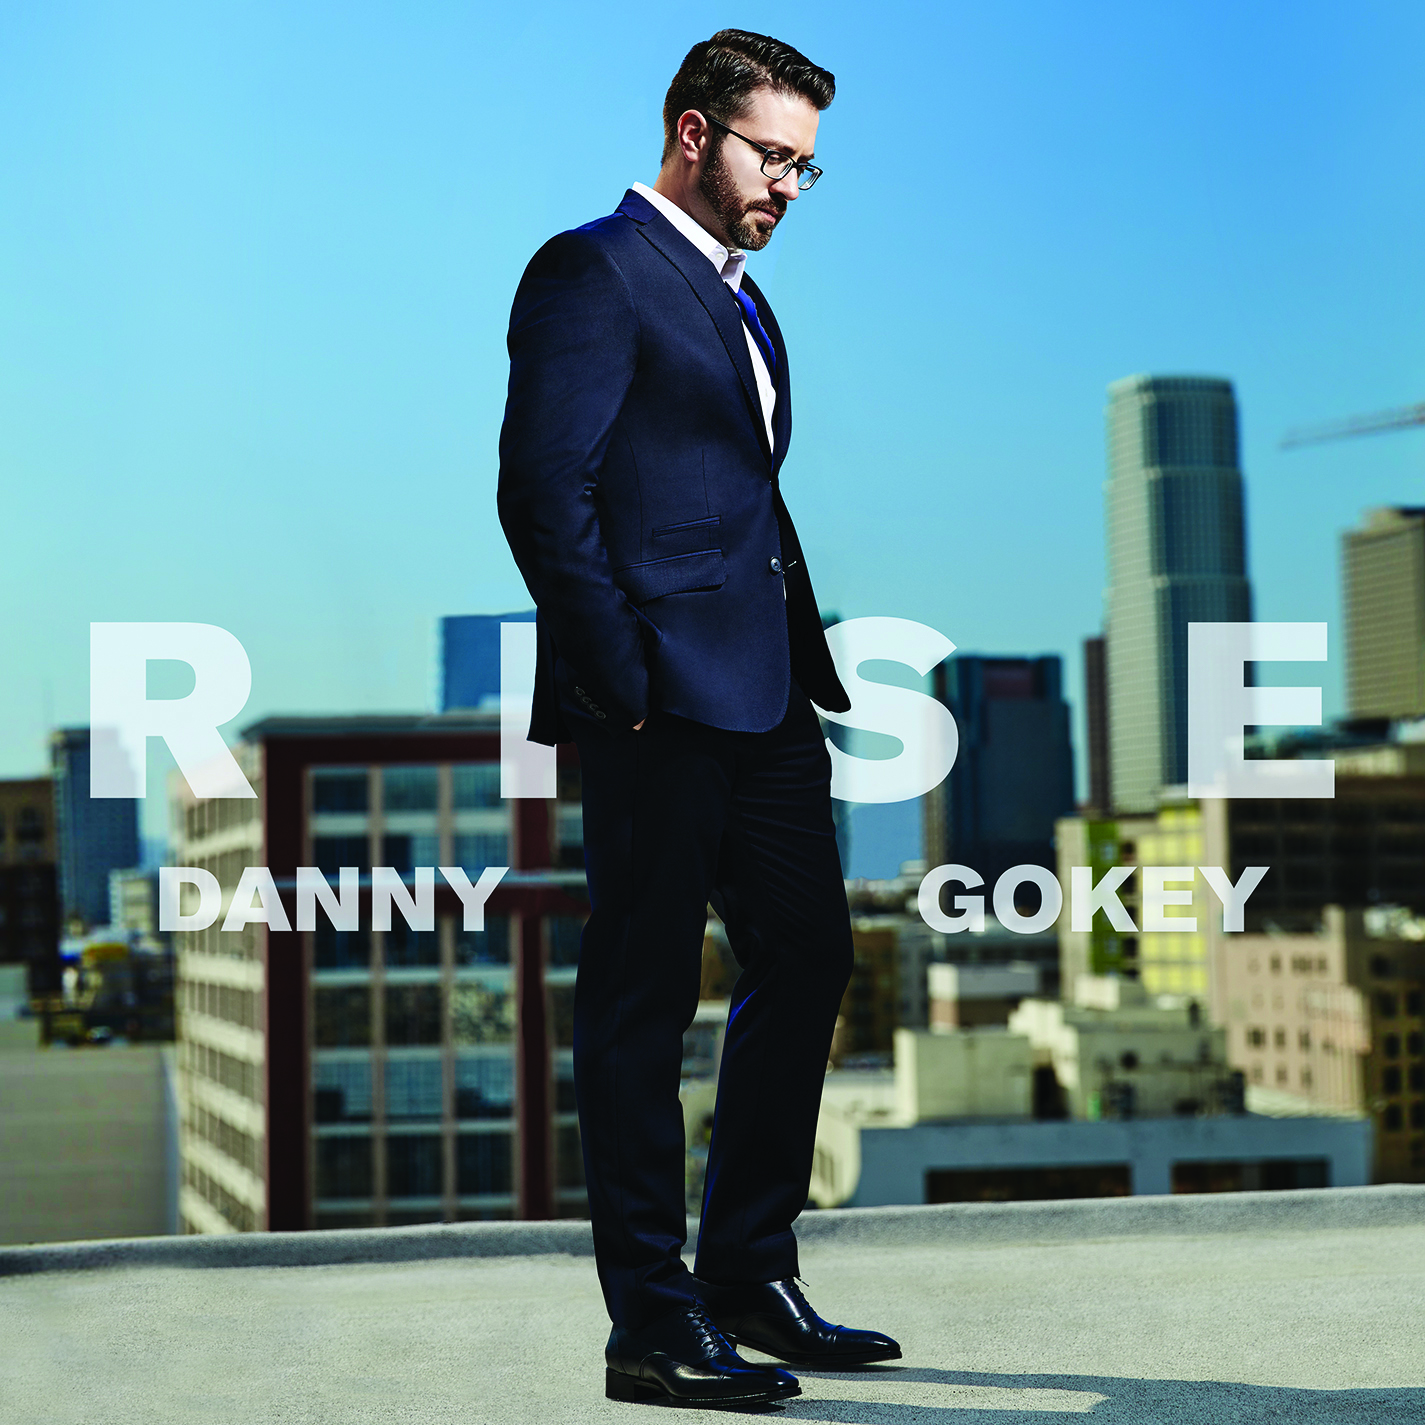 Rise - Danny Gokey